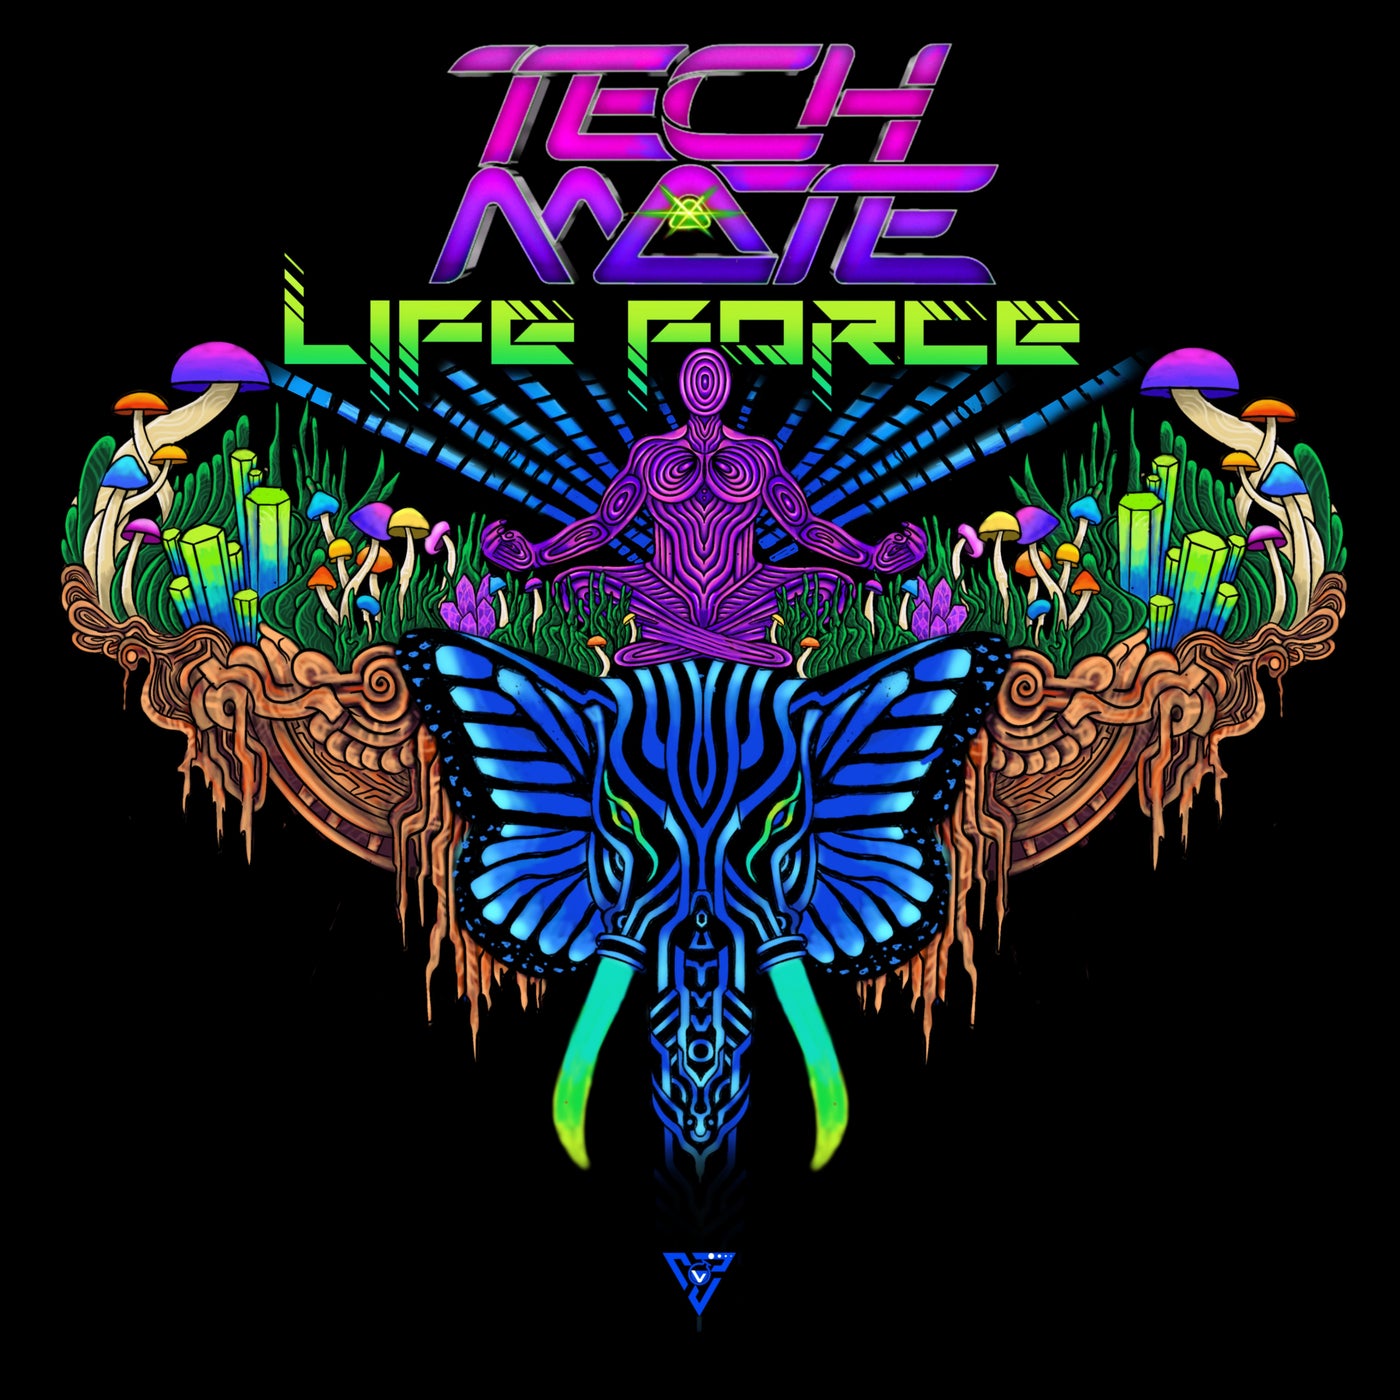 Life Force EP